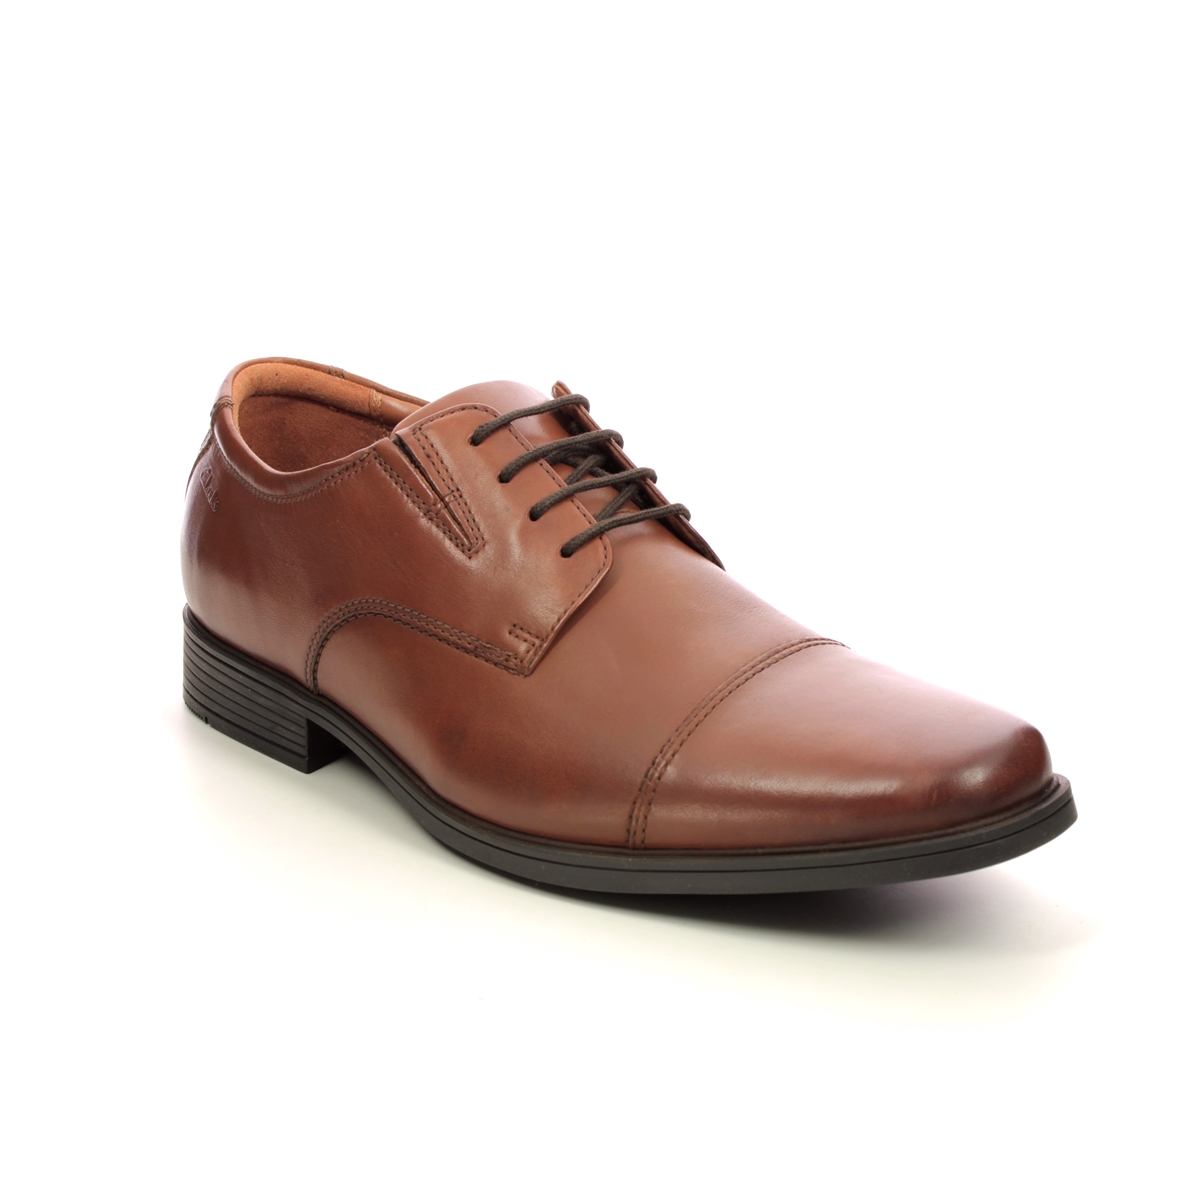 Clarks Tilden Cap Dark Tan Mens Formal Shoes 300968H In Size 12 In Plain Dark Tan H Width Fitting Extra Wide